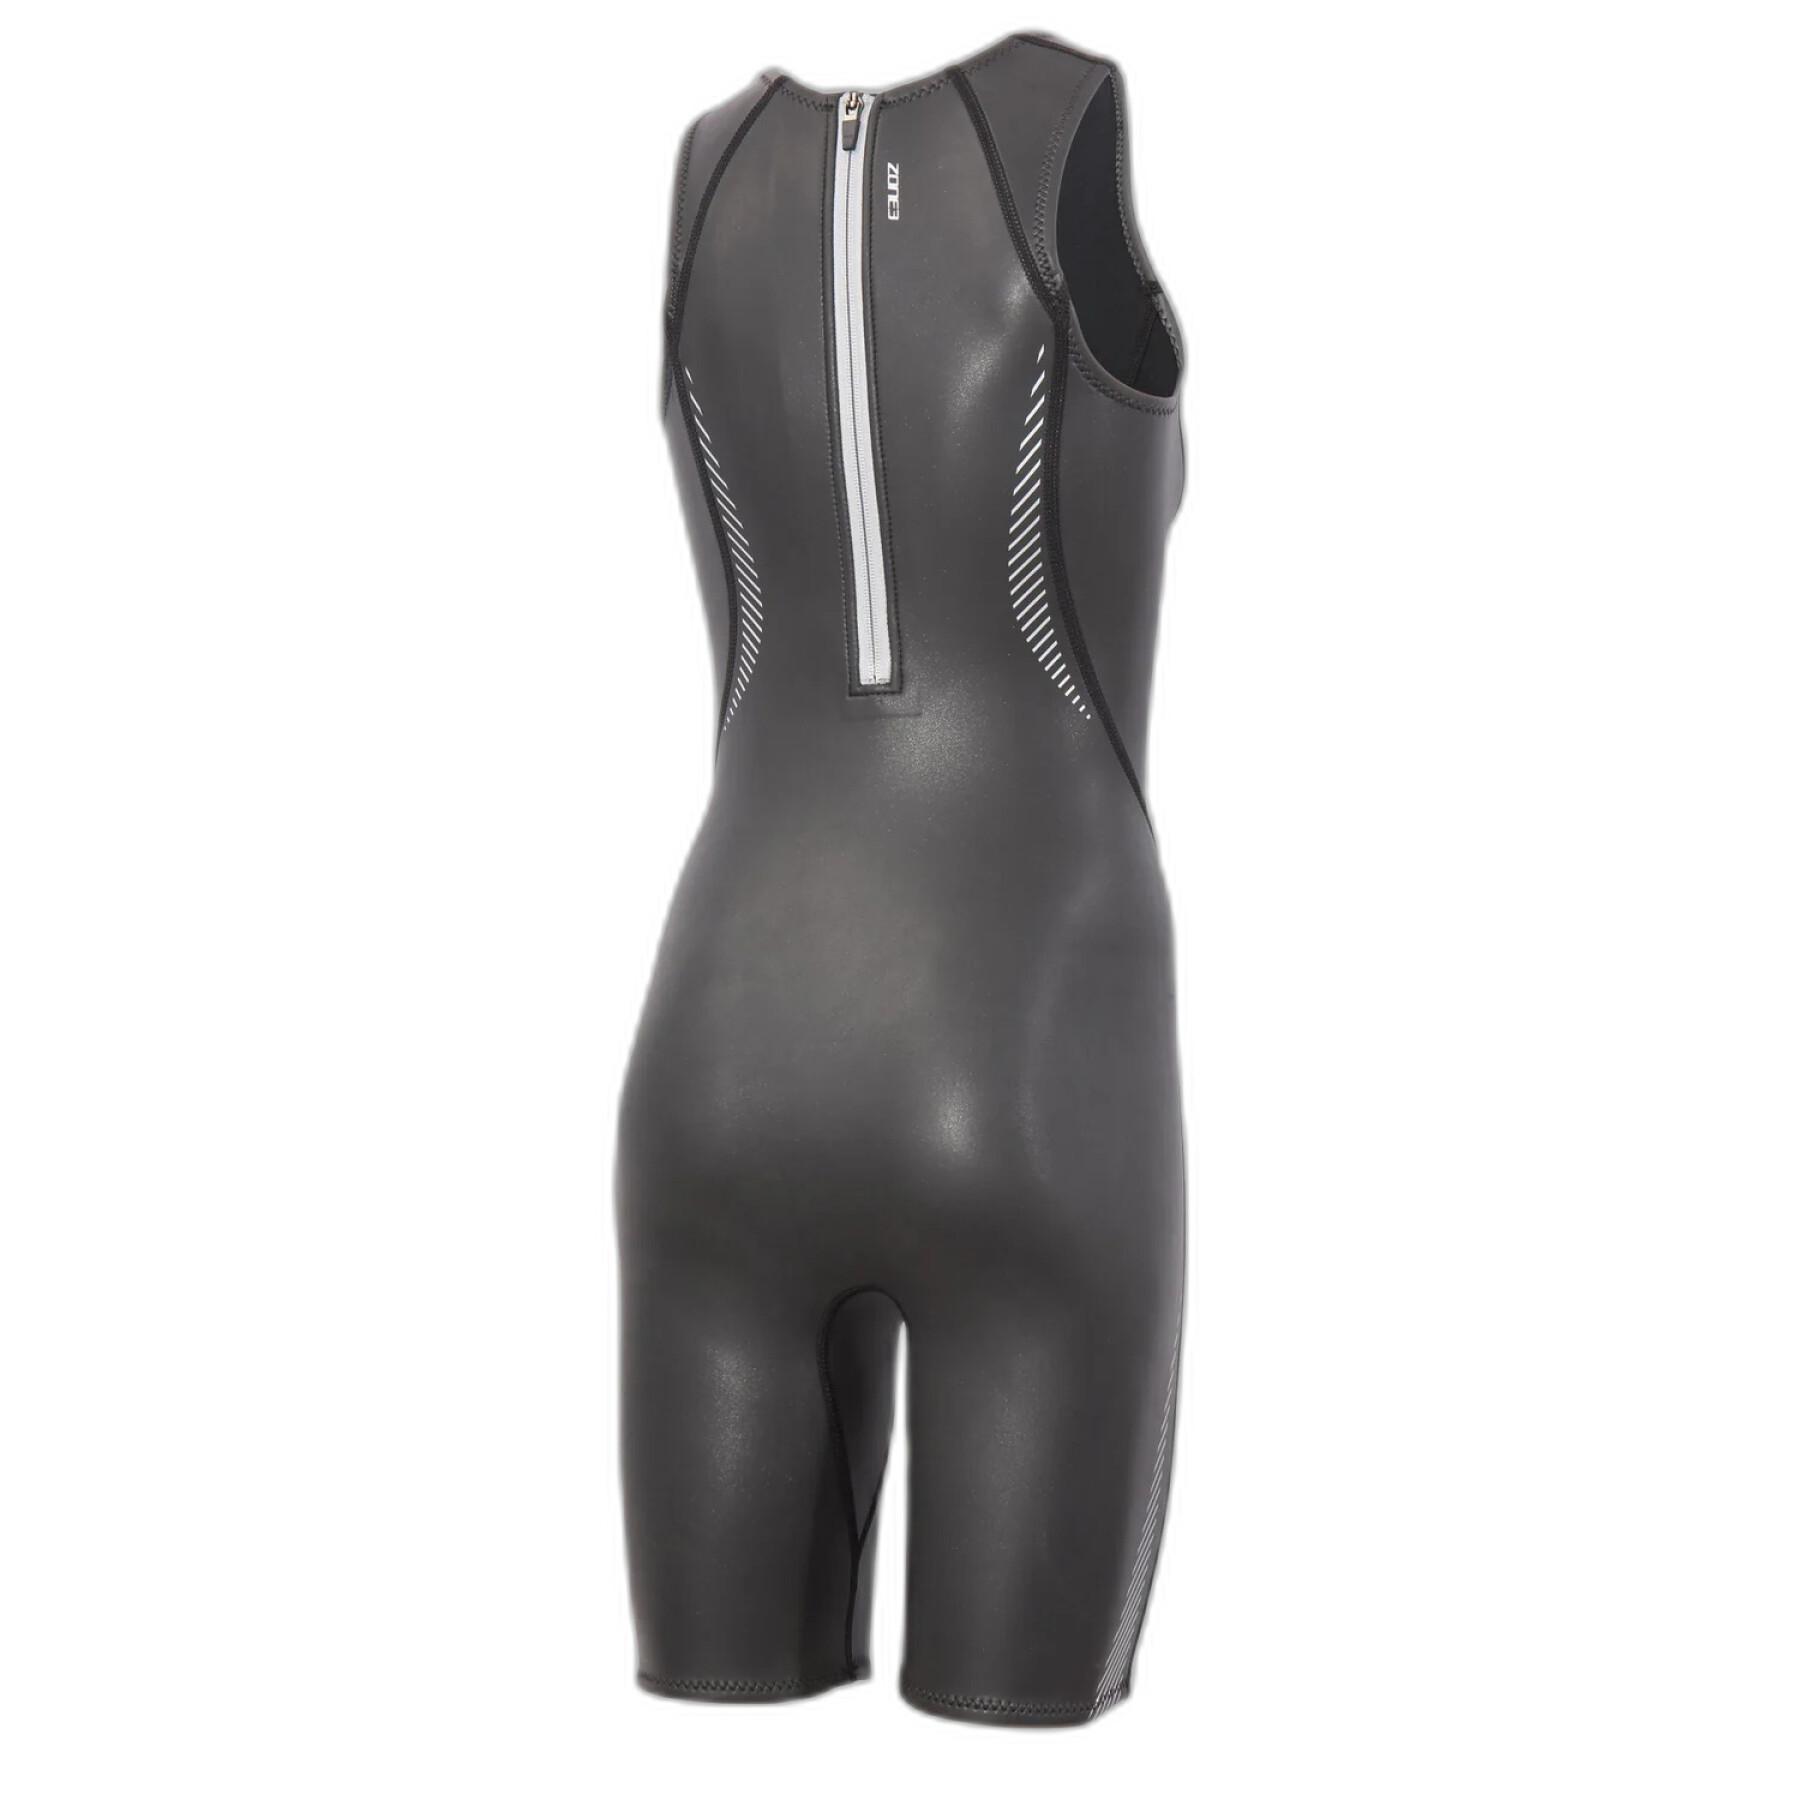 Women's neoprene tri-function wetsuit Zone3